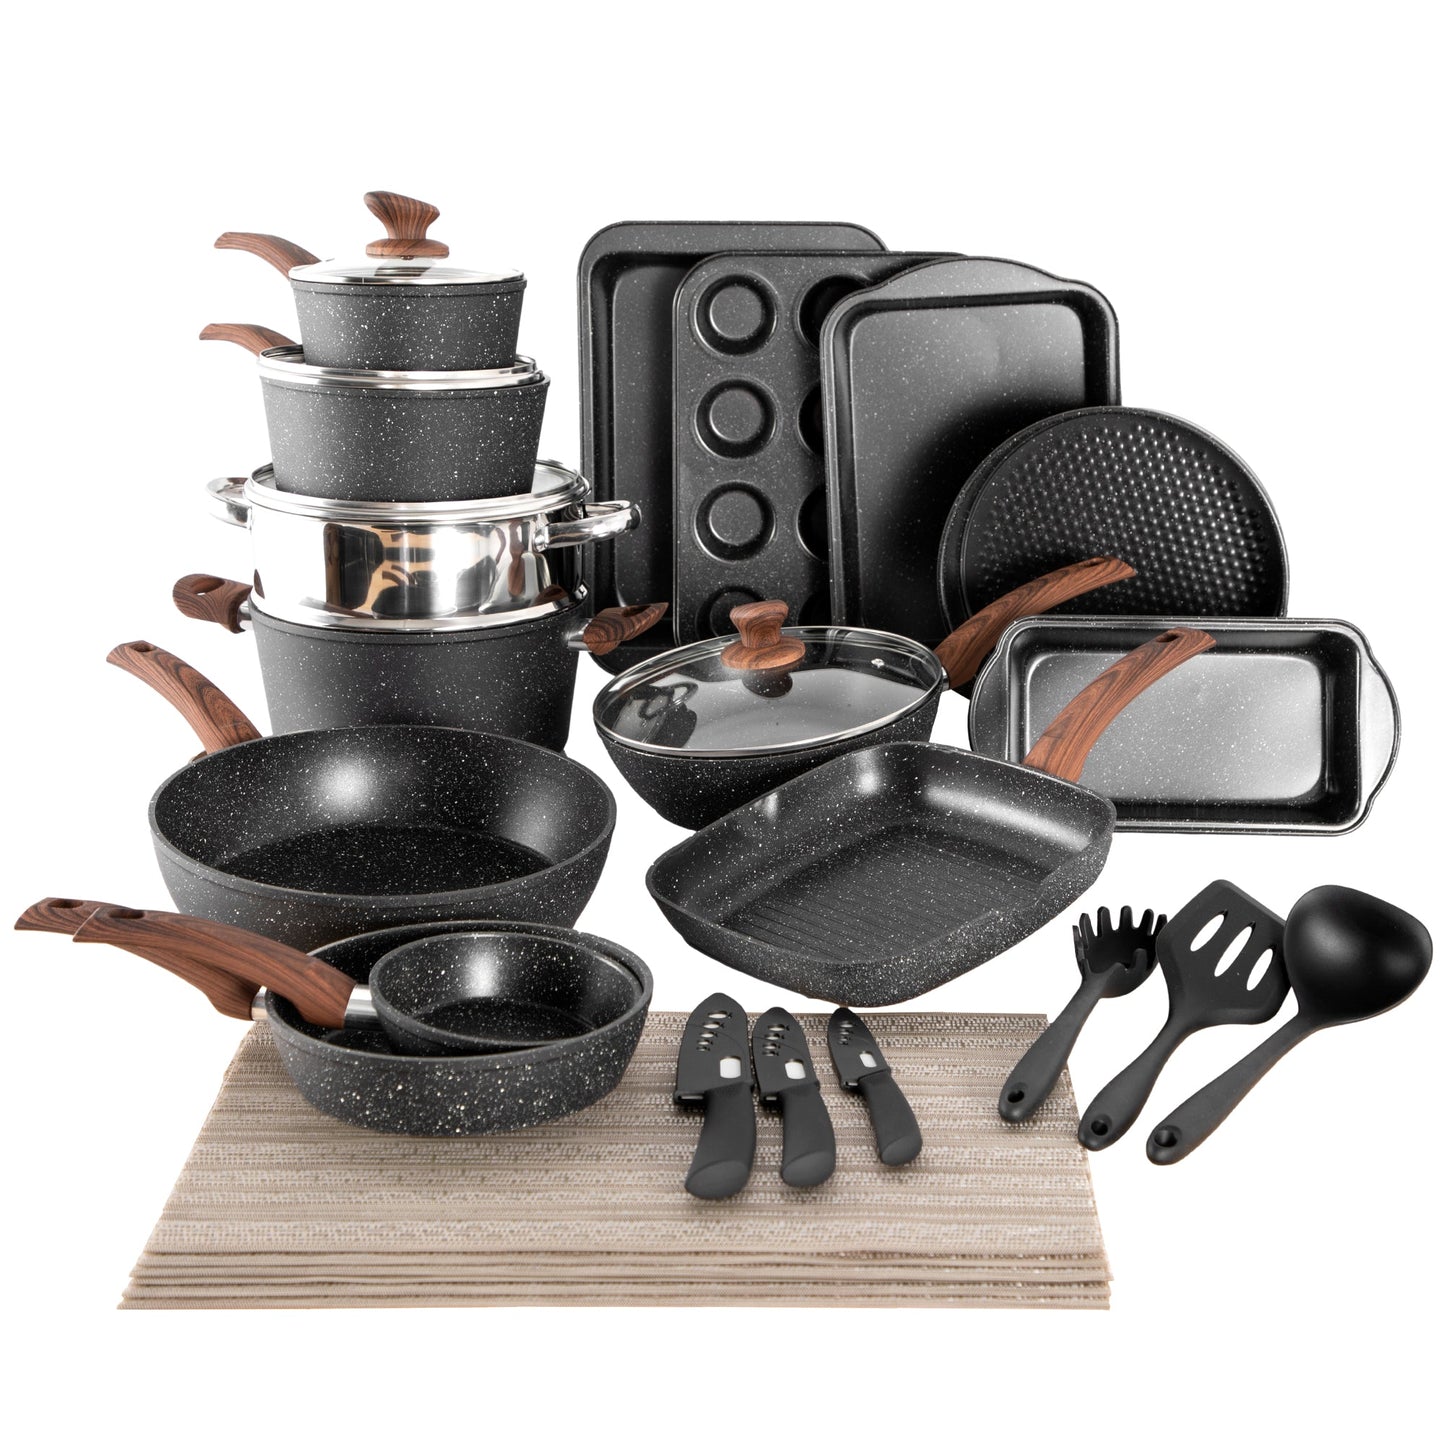 Sophia & William 30 Pieces Cookware & Bakeware Set Granite Non-stick Aluminum Pots and Pans, Black